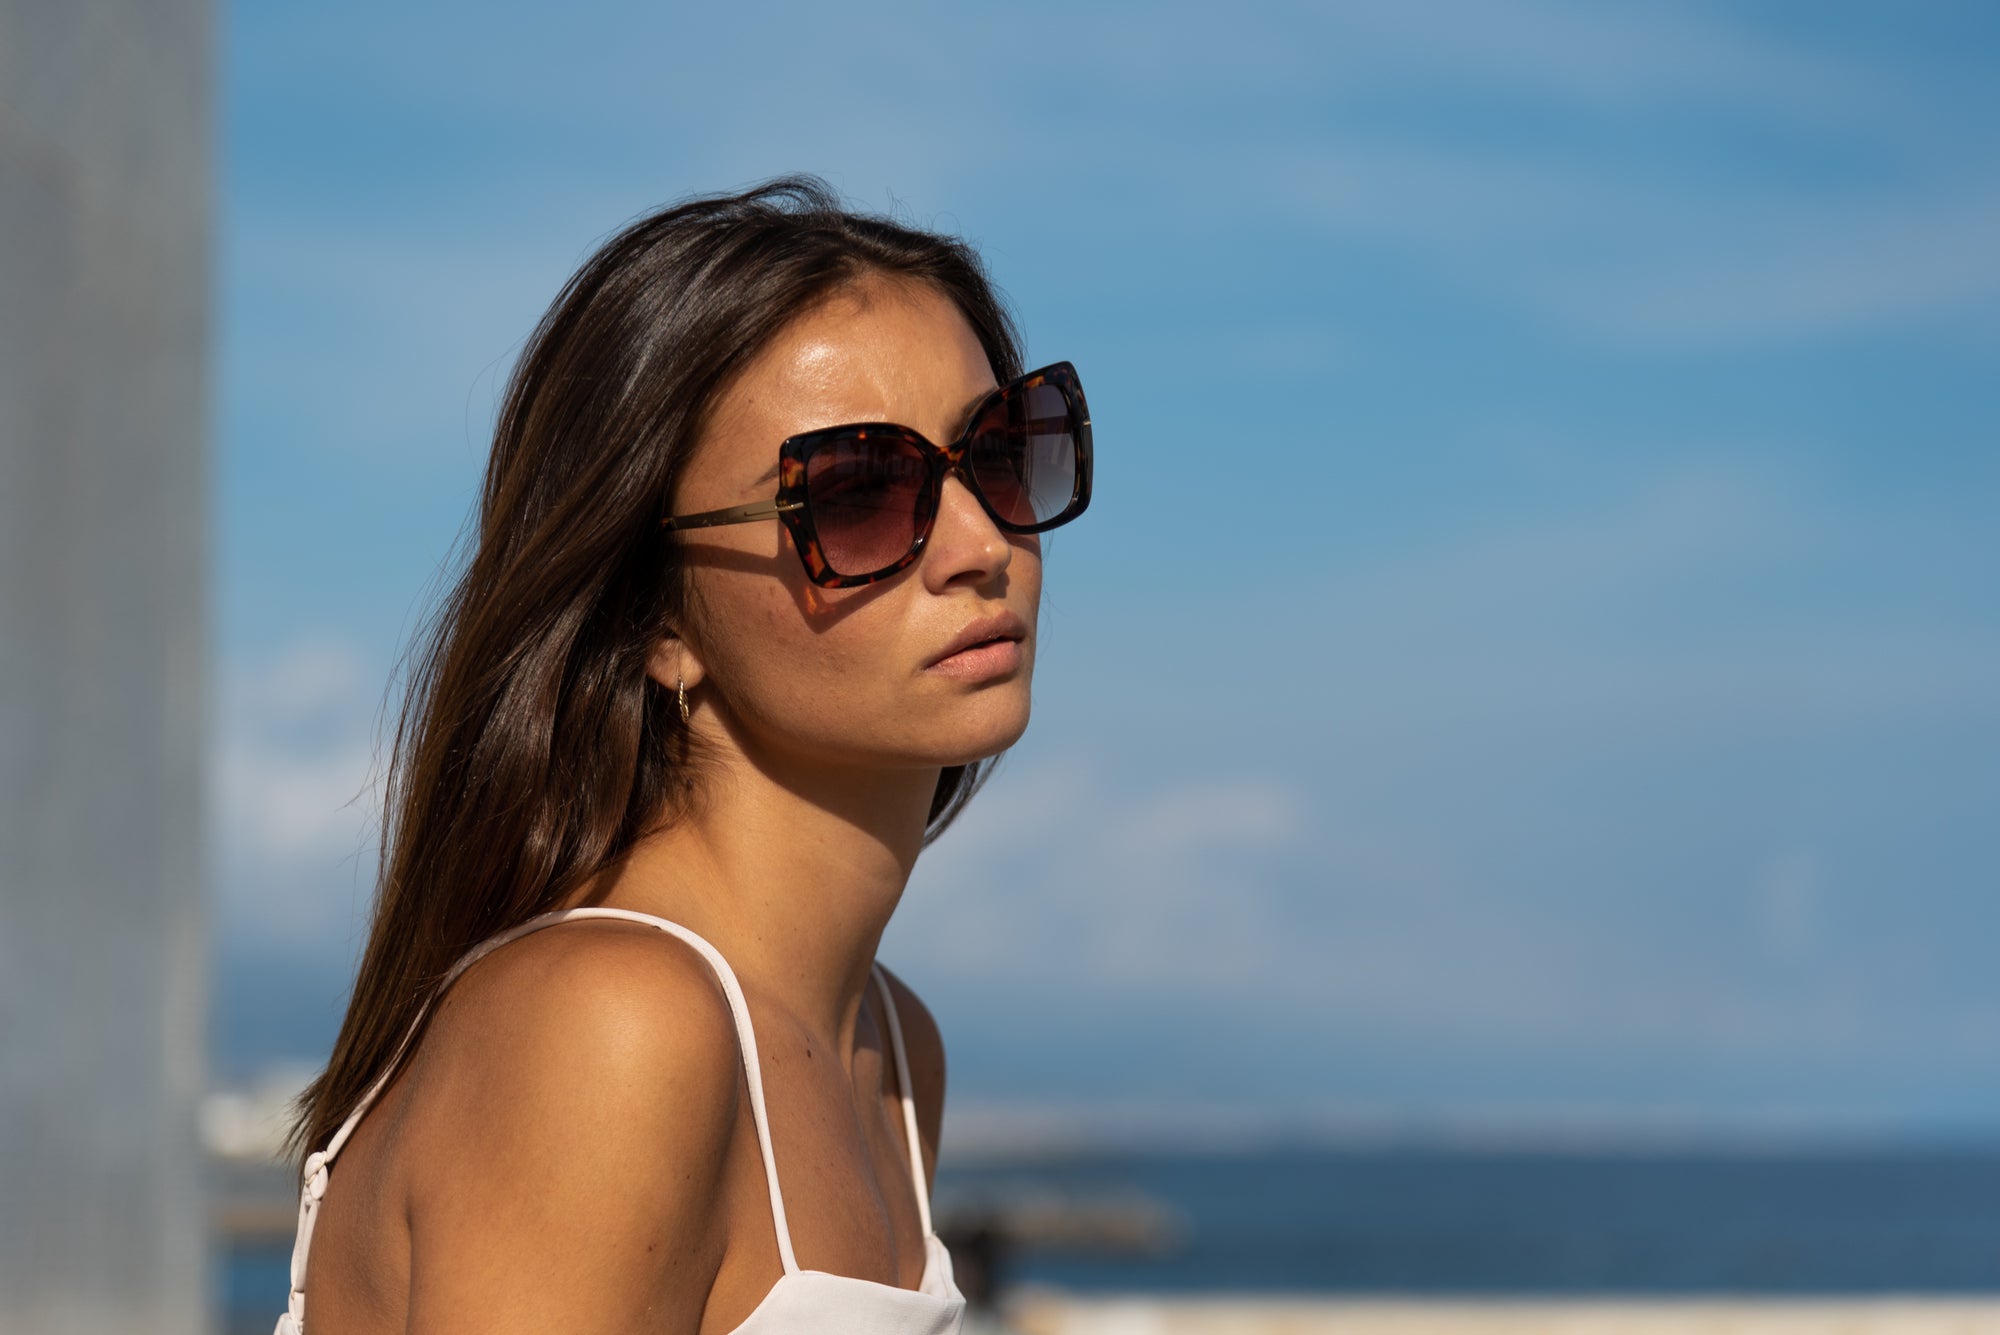 Top 10 Models of sunglasses for women